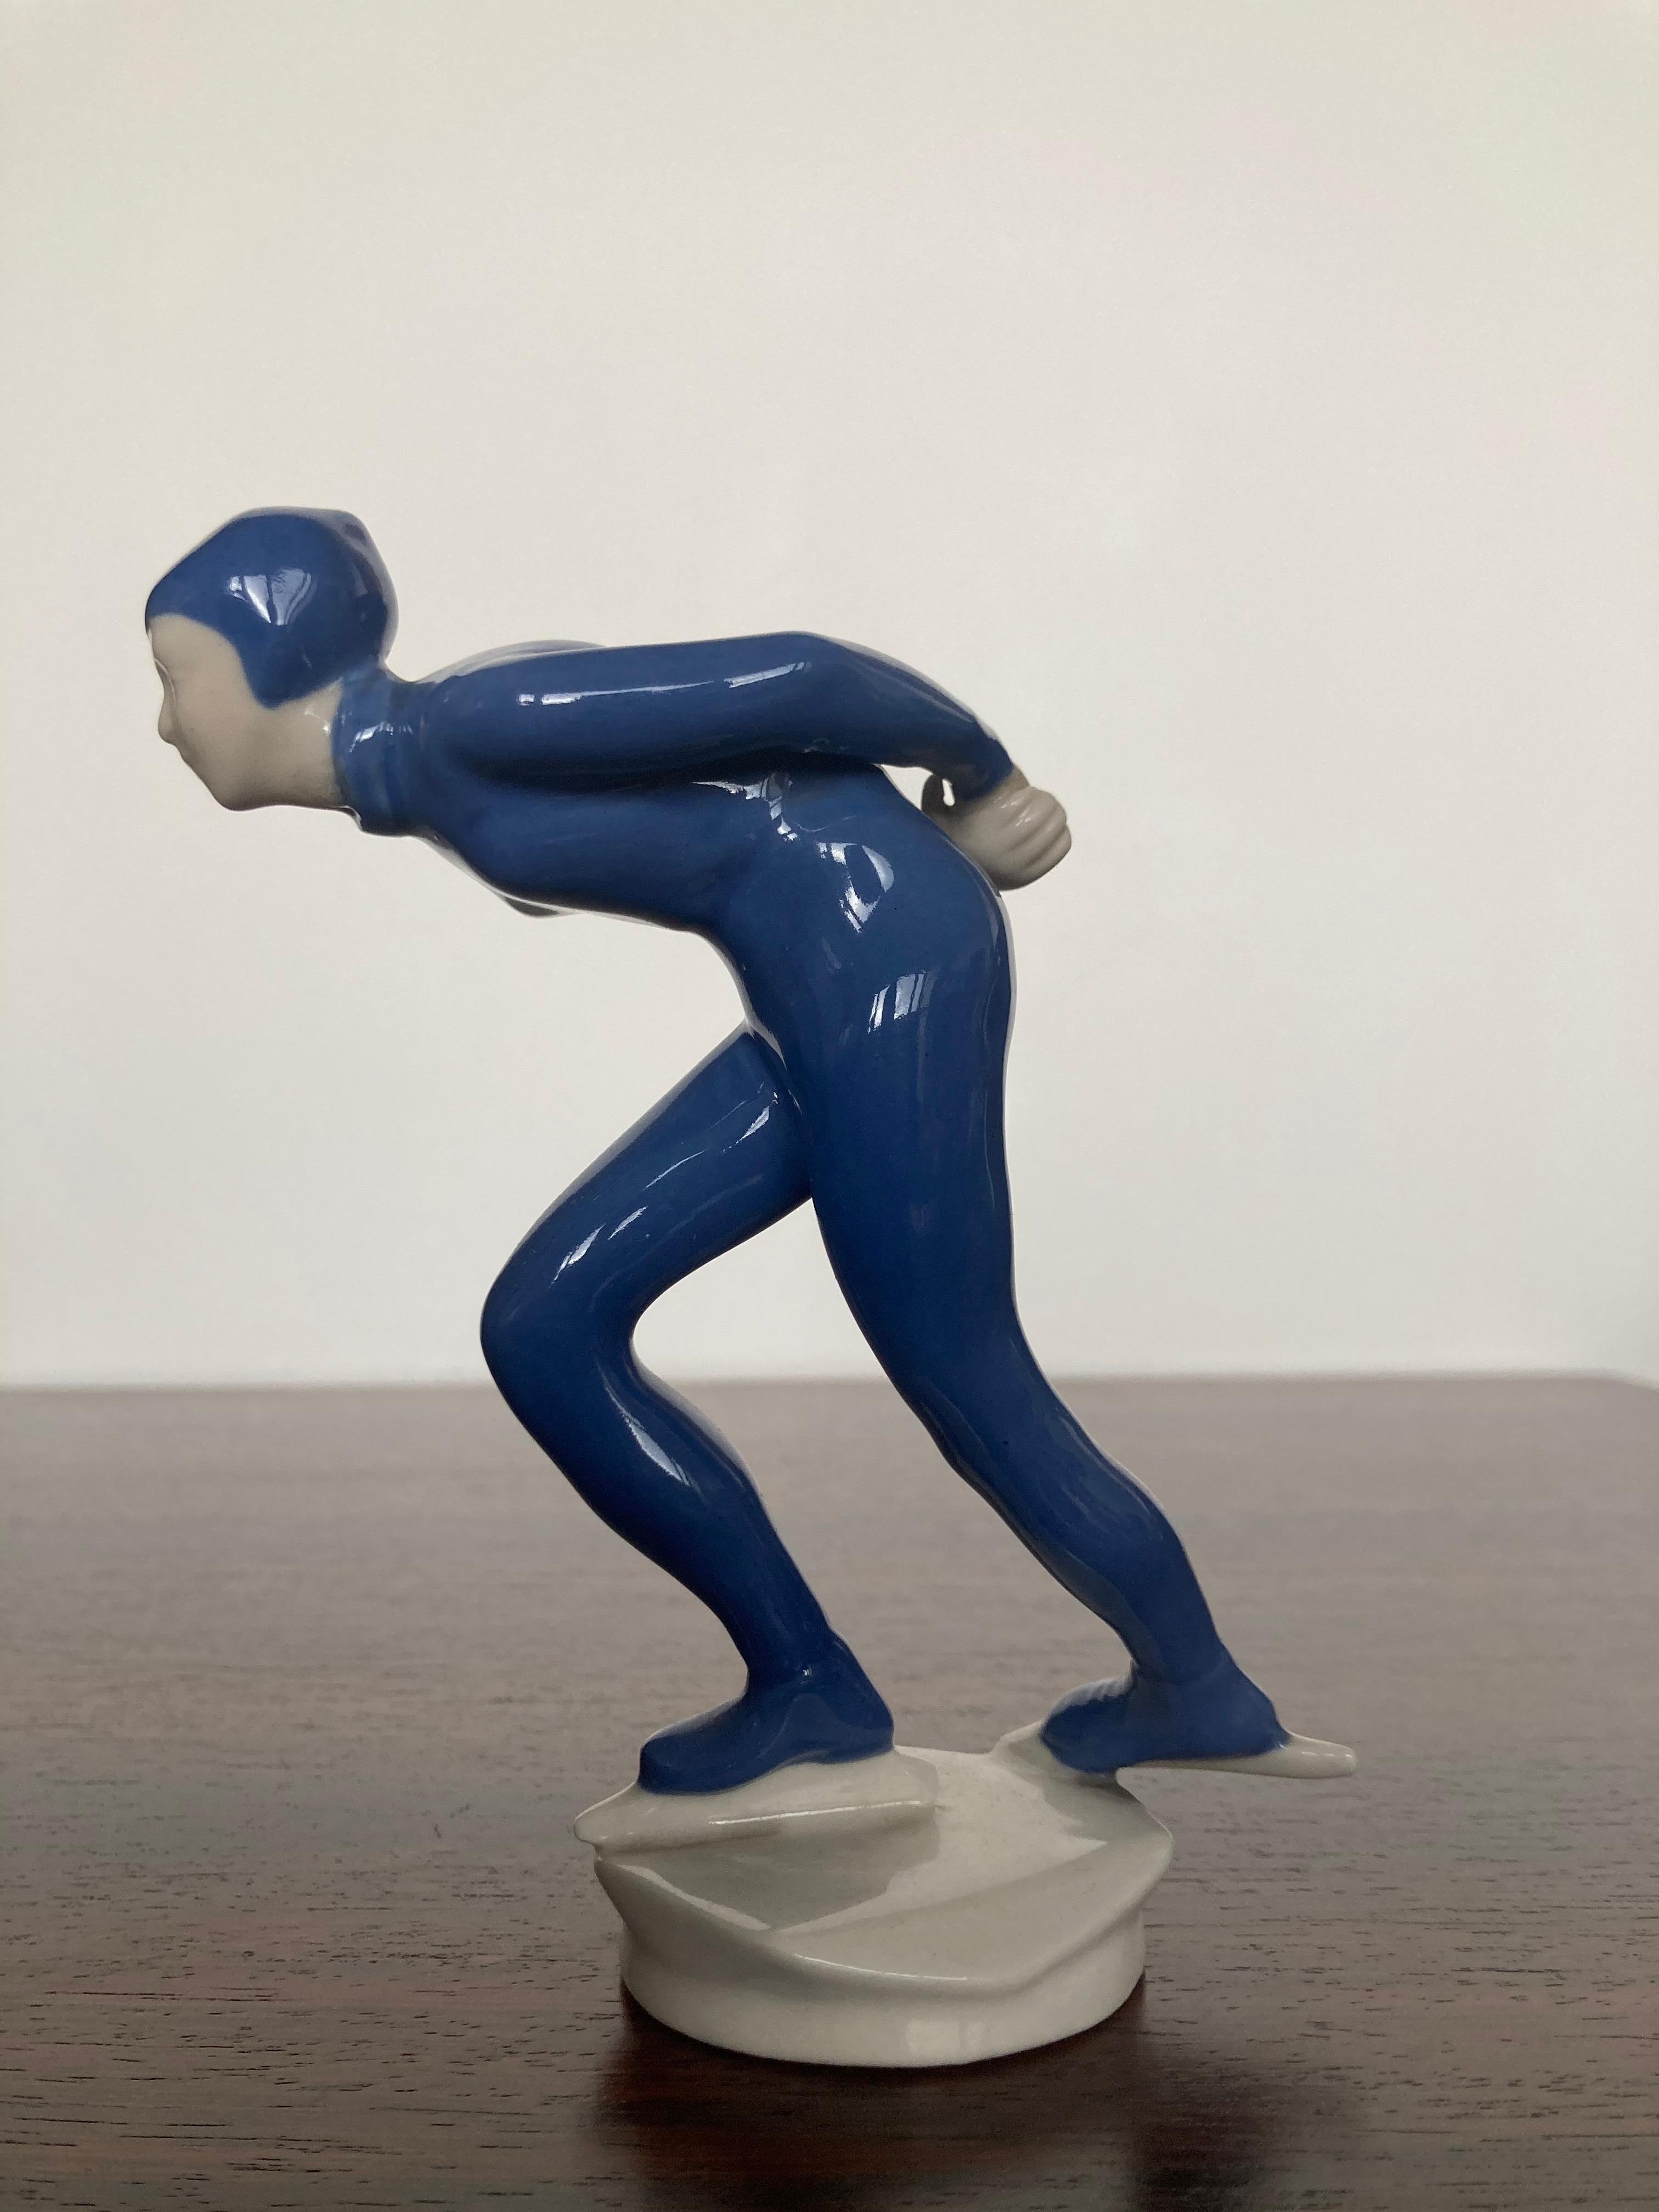 Czech Sport Ceramic Sculpture Athlete Ice Skater by J.Hejdova Holeckova, 1950s For Sale